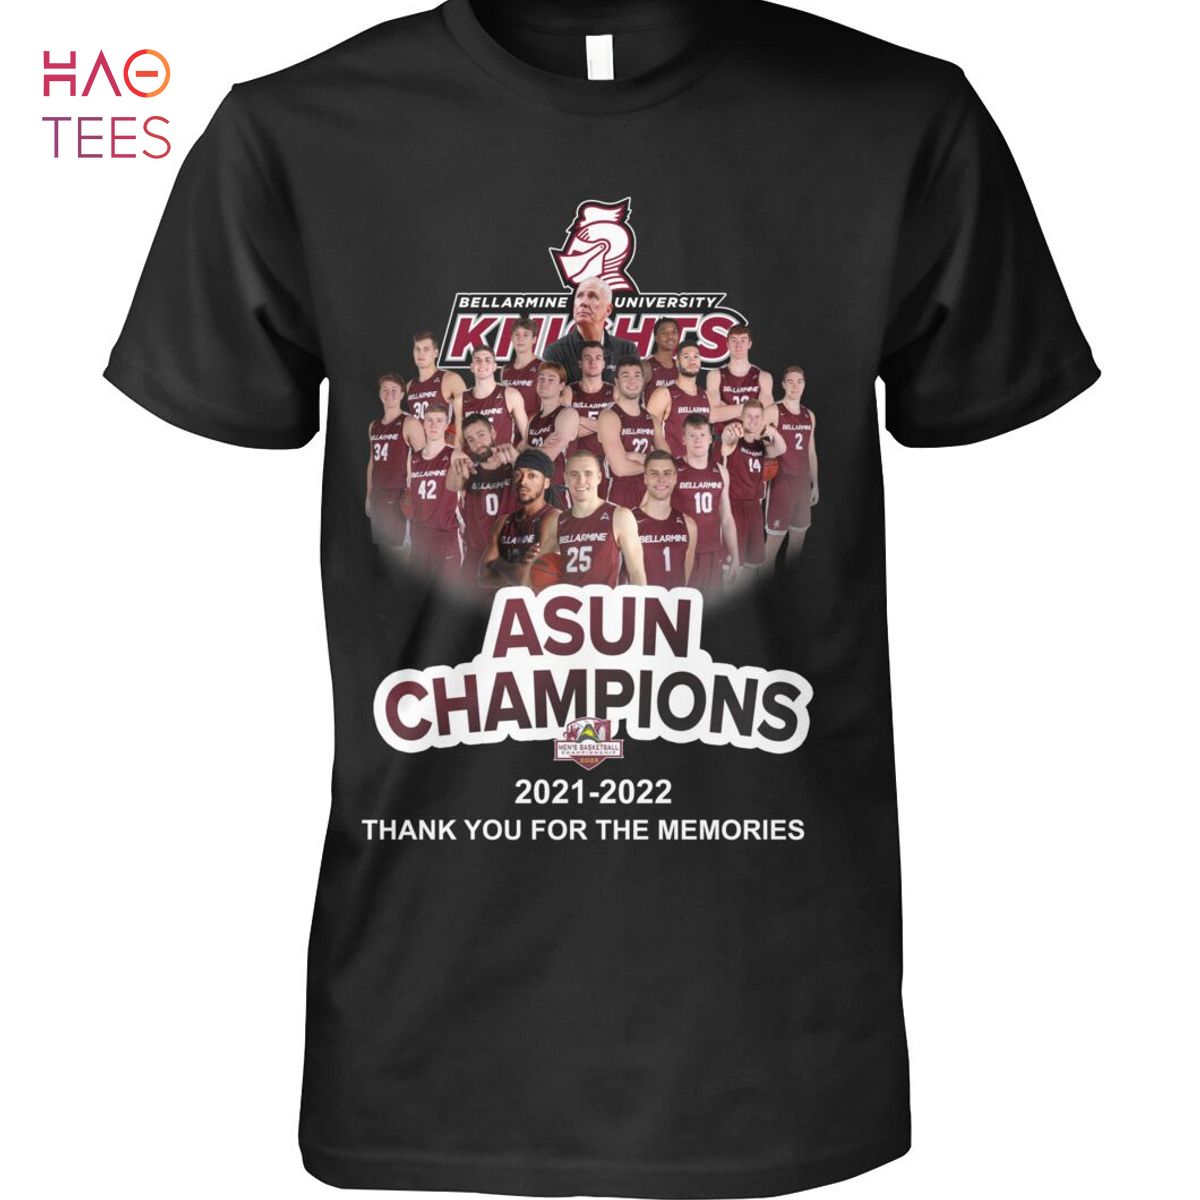 Asun Champions 2021-2022 Shirt Limietd Edition